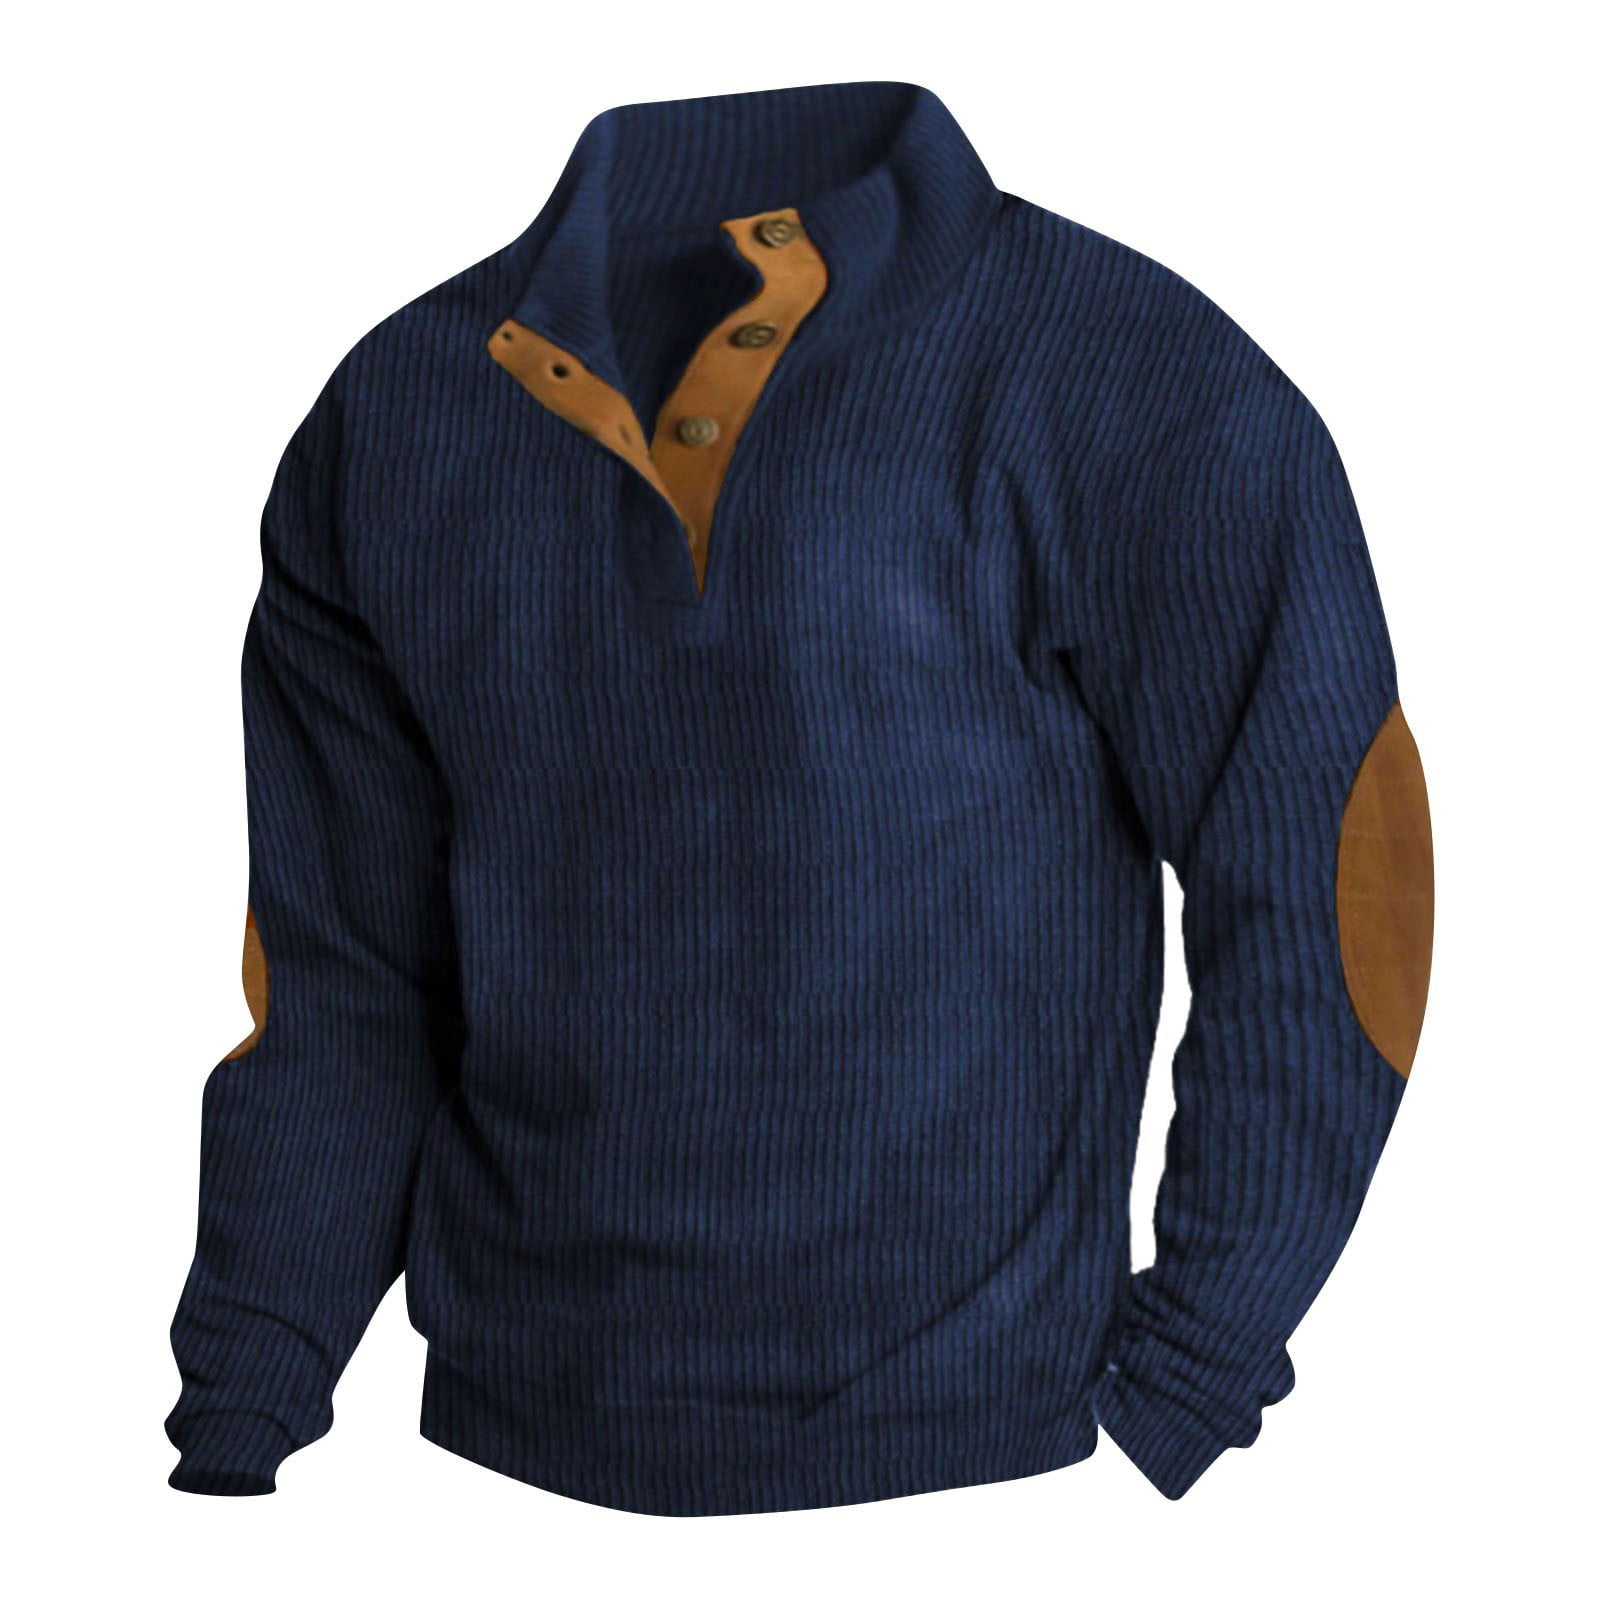 Men's Tan Pea Coat, Navy V-neck Sweater, Blue Dress Shirt